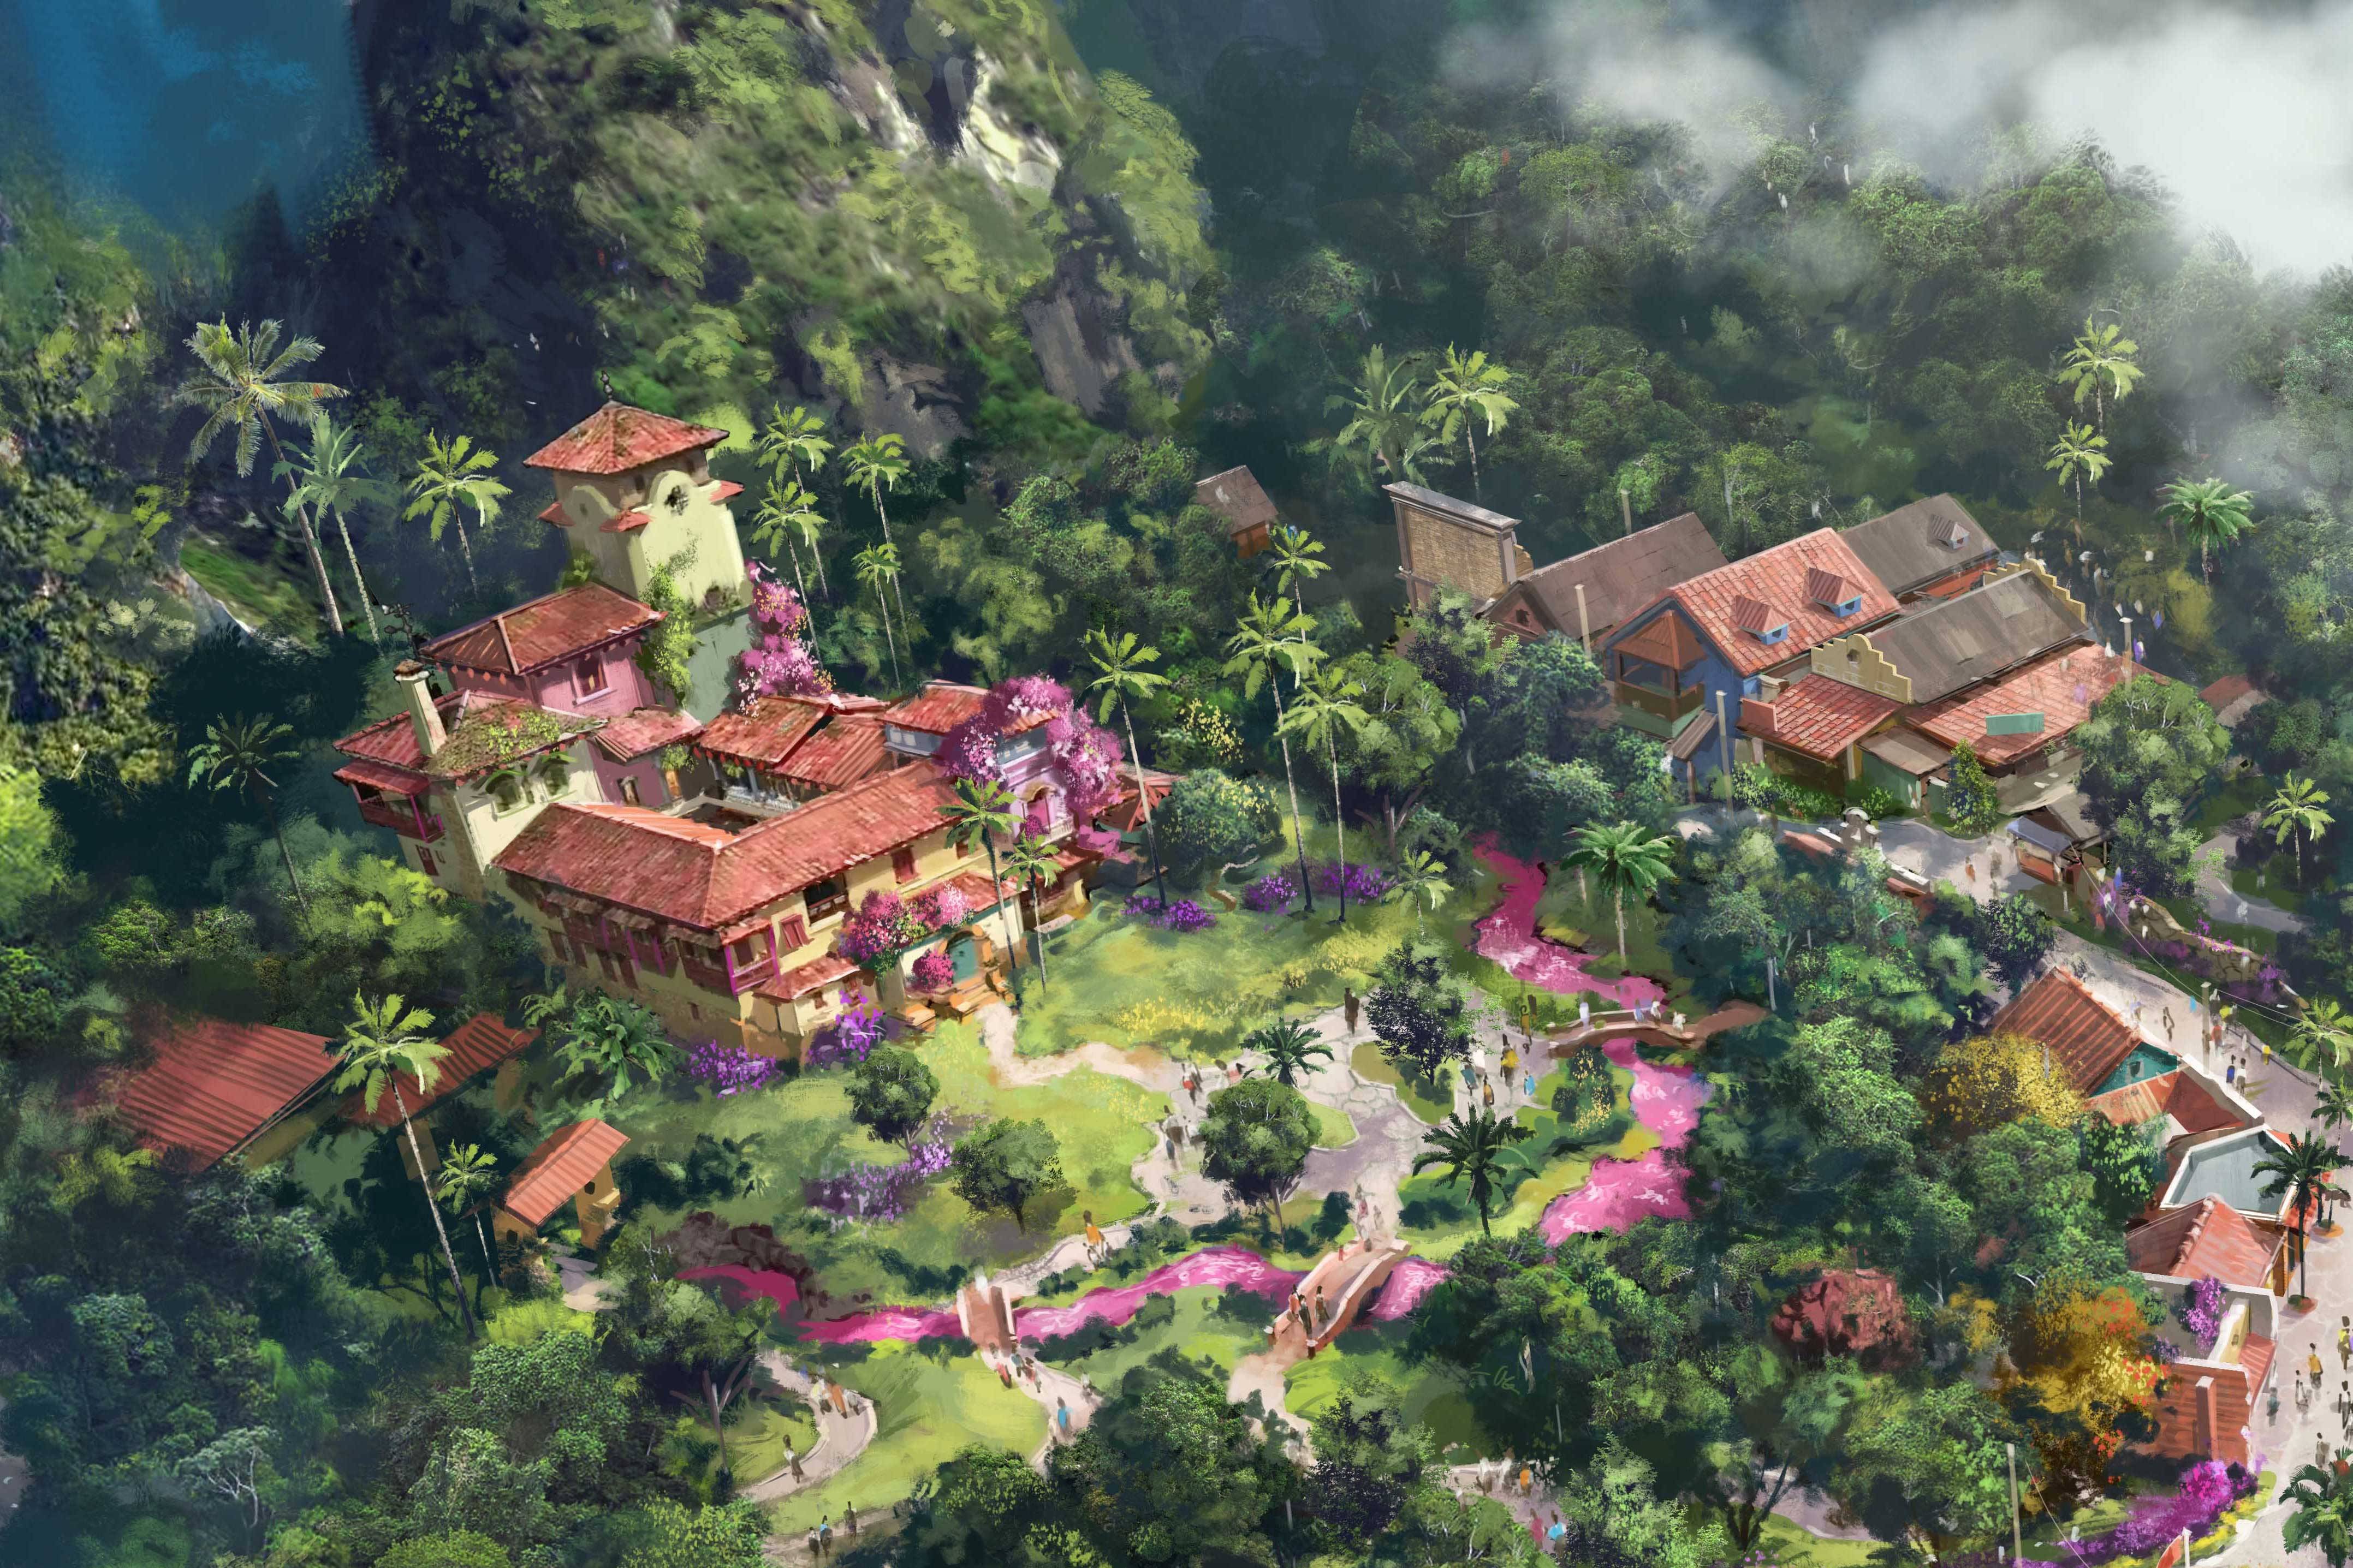 Tropical Americas Encanto land concept art at Disney's Animal Kingdom